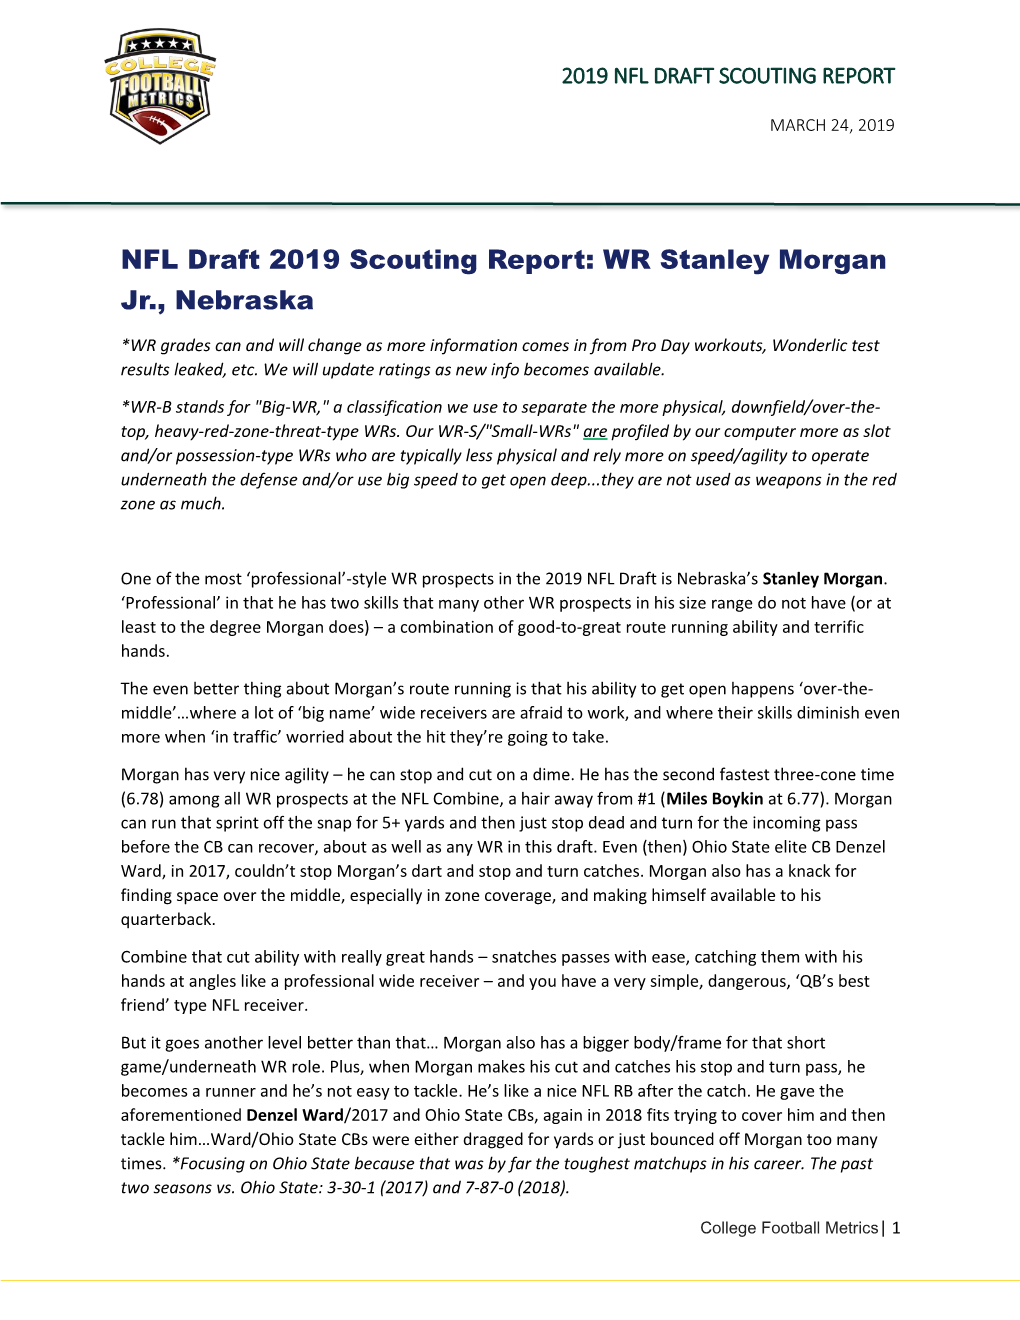 NFL Draft 2019 Scouting Report: WR Stanley Morgan Jr., Nebraska